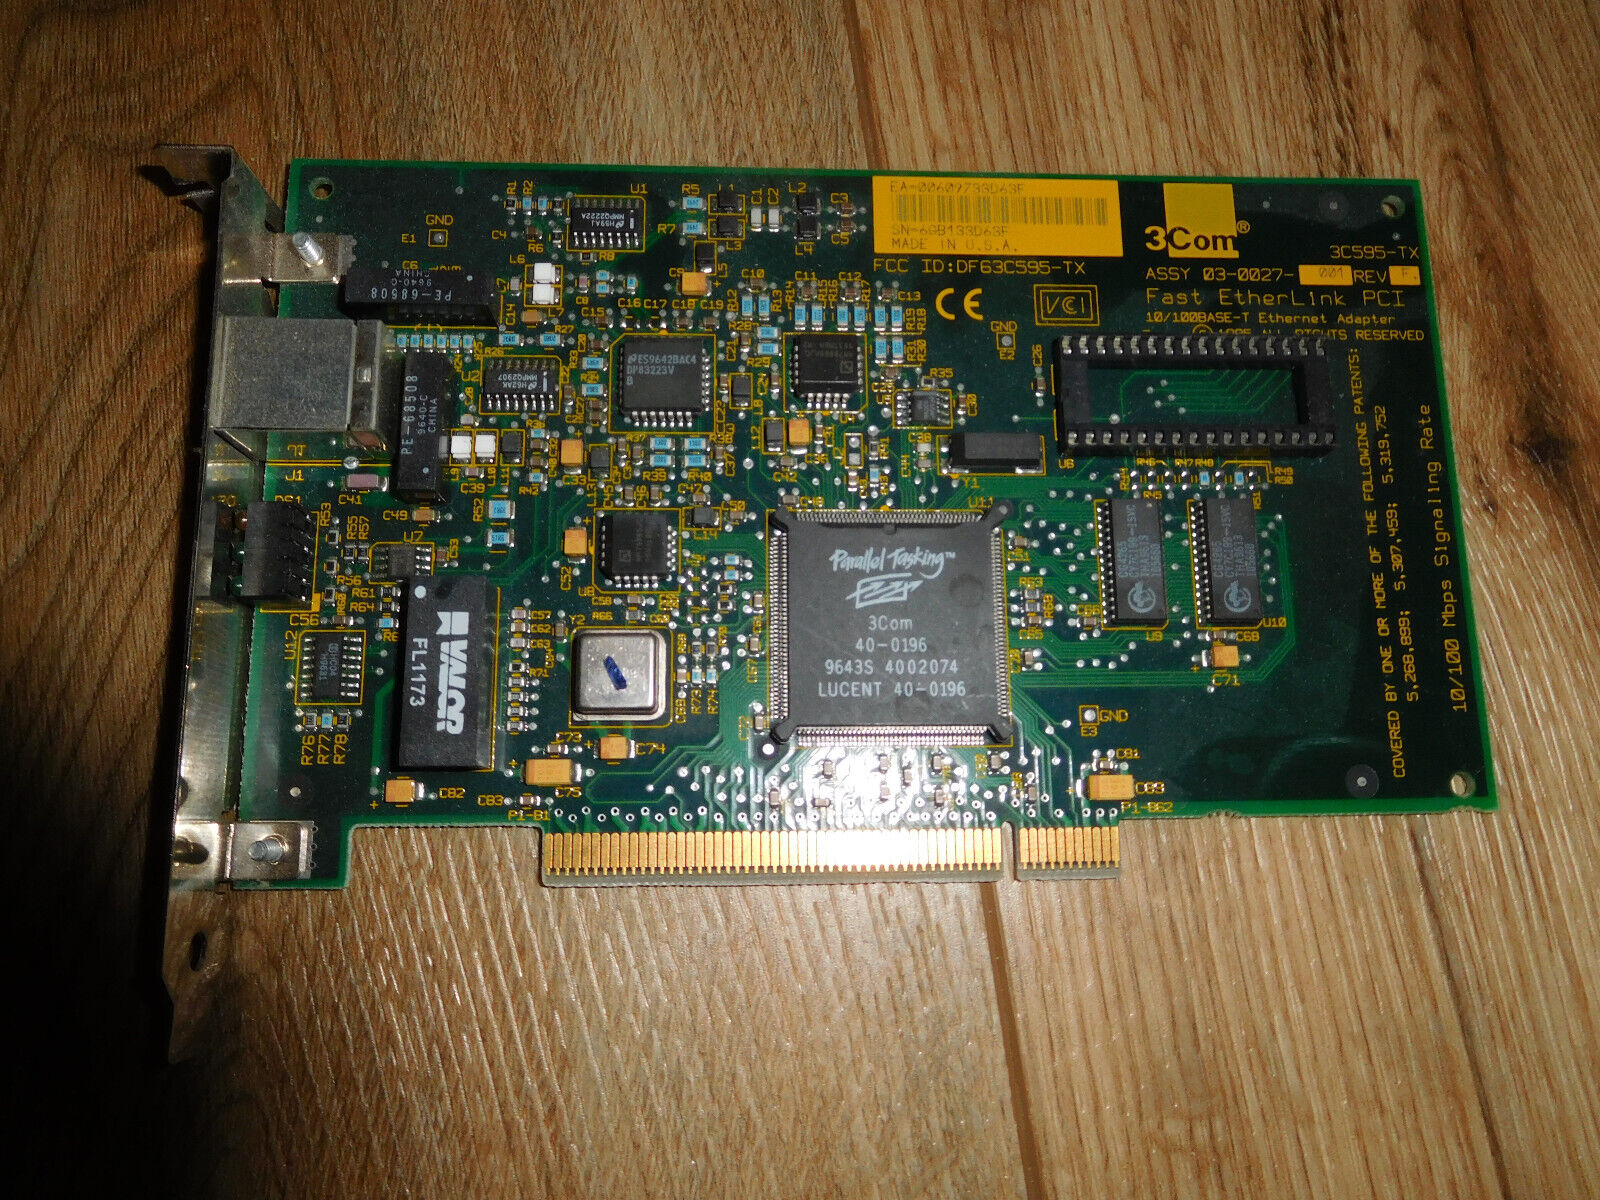 3COM 3C595-TX; ASSY 03-0027-001 FAST ETHERLINK PCI 10/100BASE-T ETHERNET ADAPTER